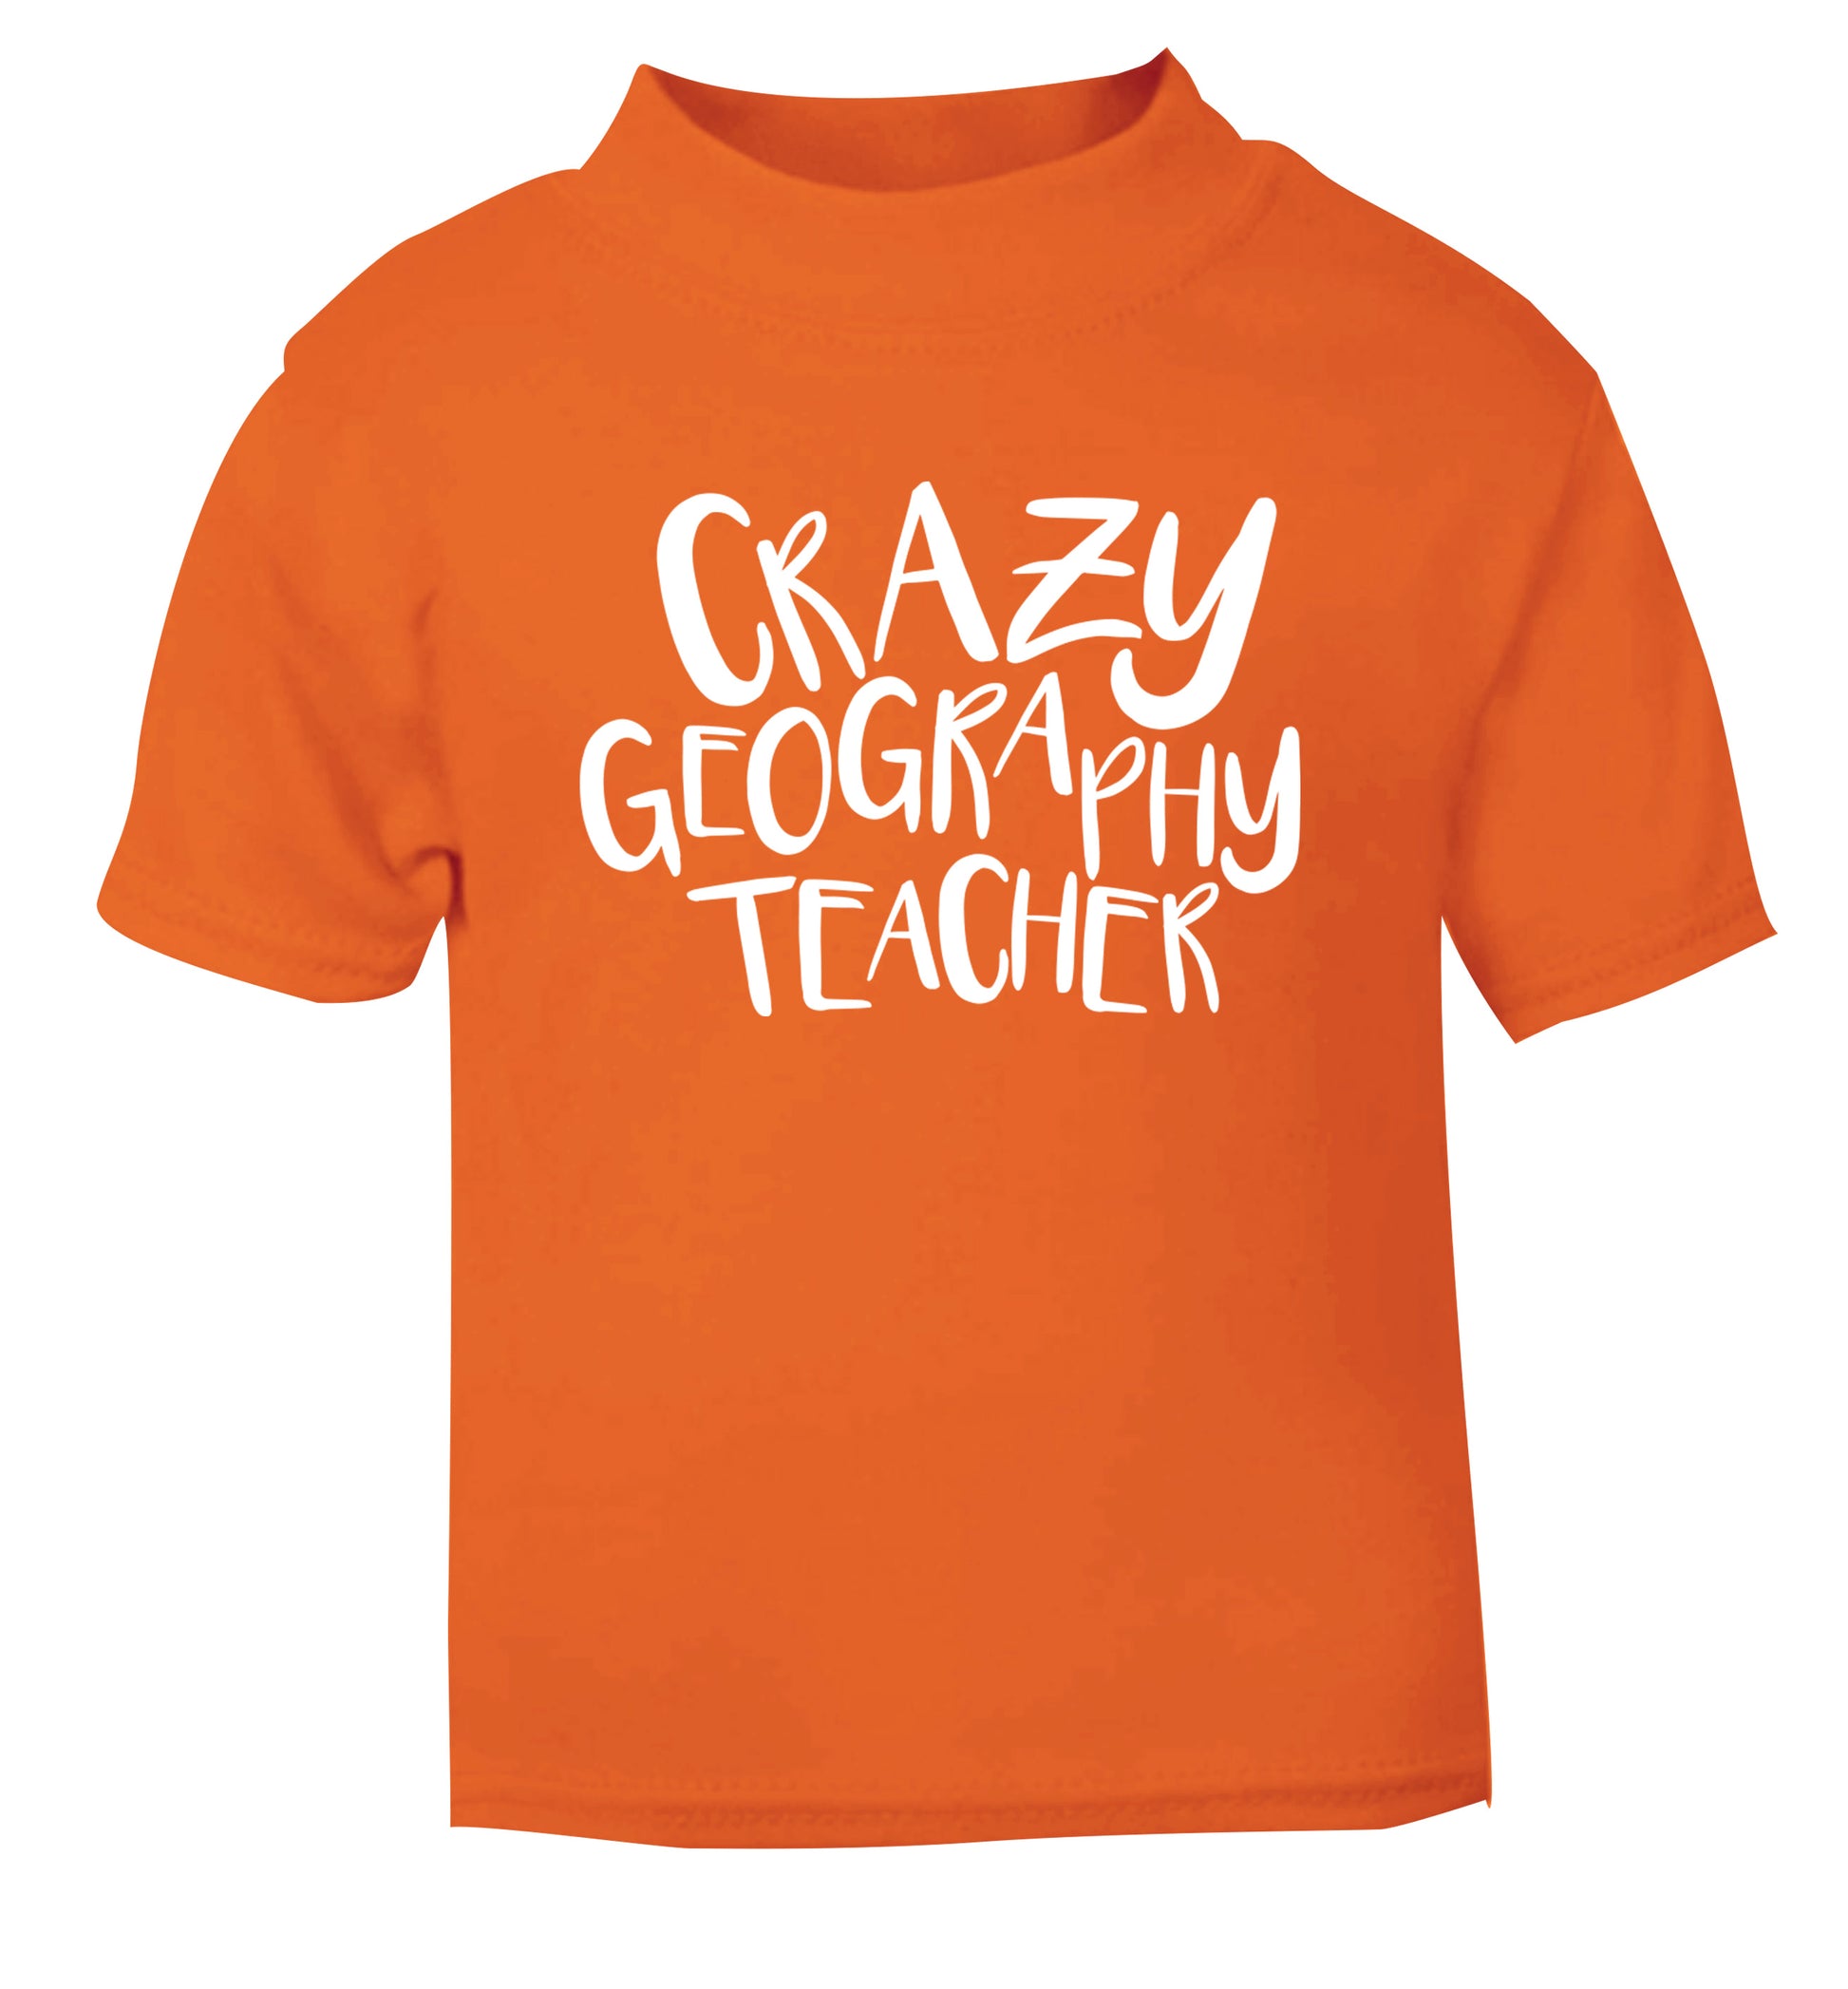 Crazy geography teacher orange Baby Toddler Tshirt 2 Years